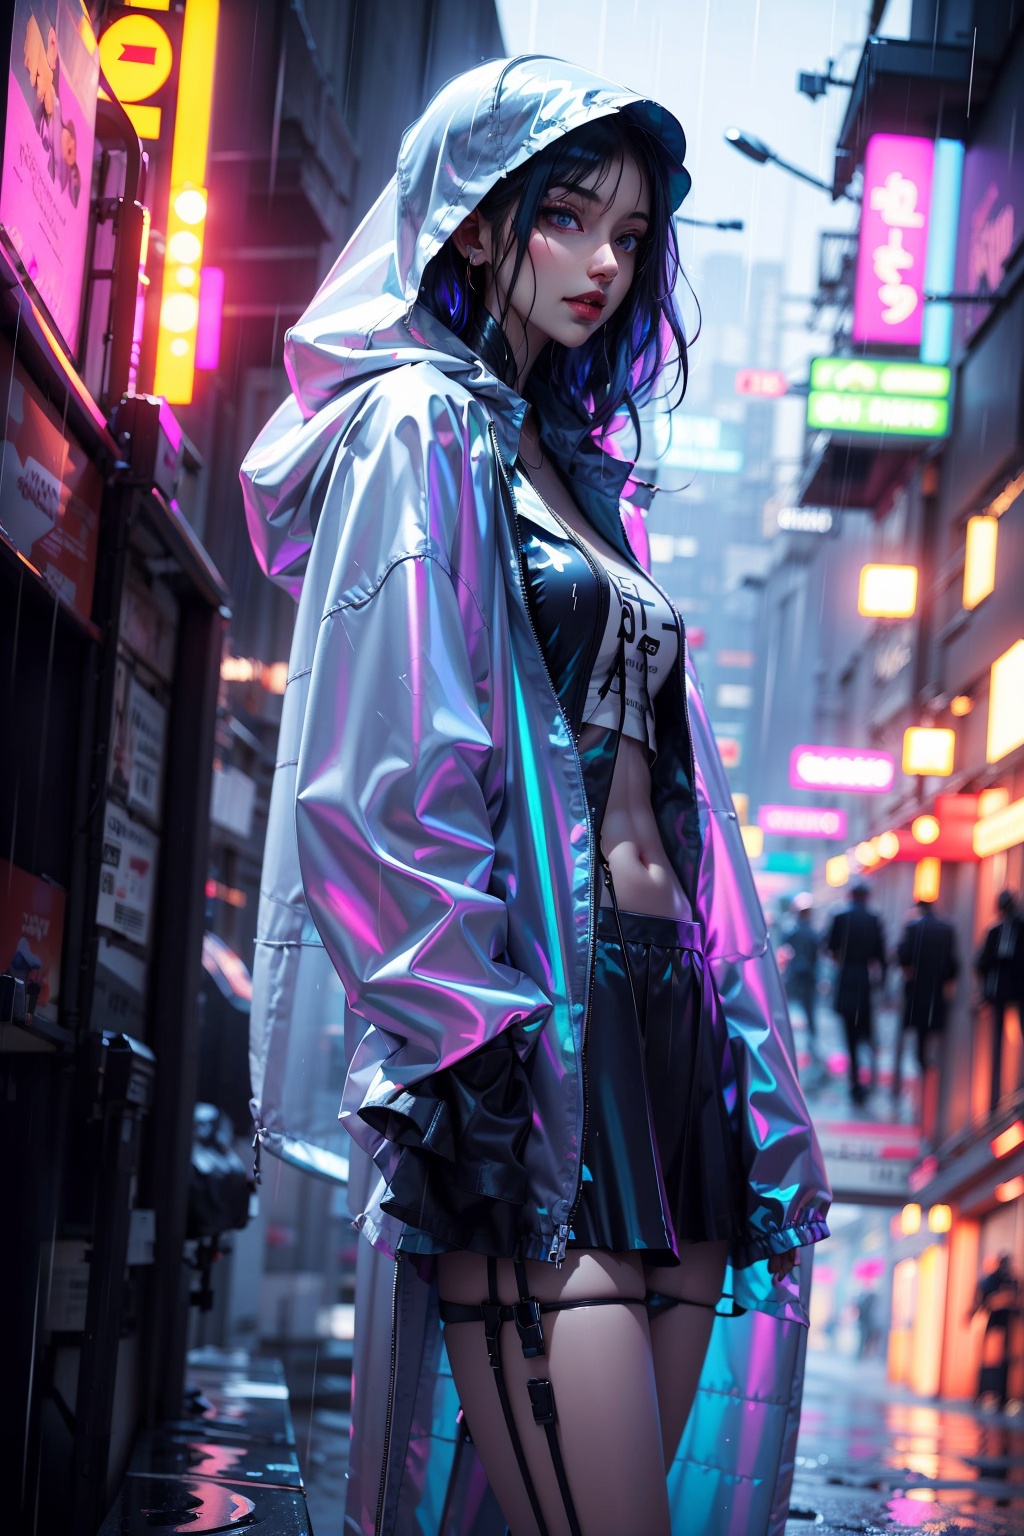 
araffe girl in a raincoat standing in the rain, inspired by Yanjun Cheng, dreamy cyberpunk girl, iridescent sci-fi kimono, glossy from rain, by Yanjun Cheng, trending on cgstation, wearing cyberpunk streetwear, backlit girl in raincoat, glowing aesthetic, artwork in the style of guweiz, glossy shiny reflective